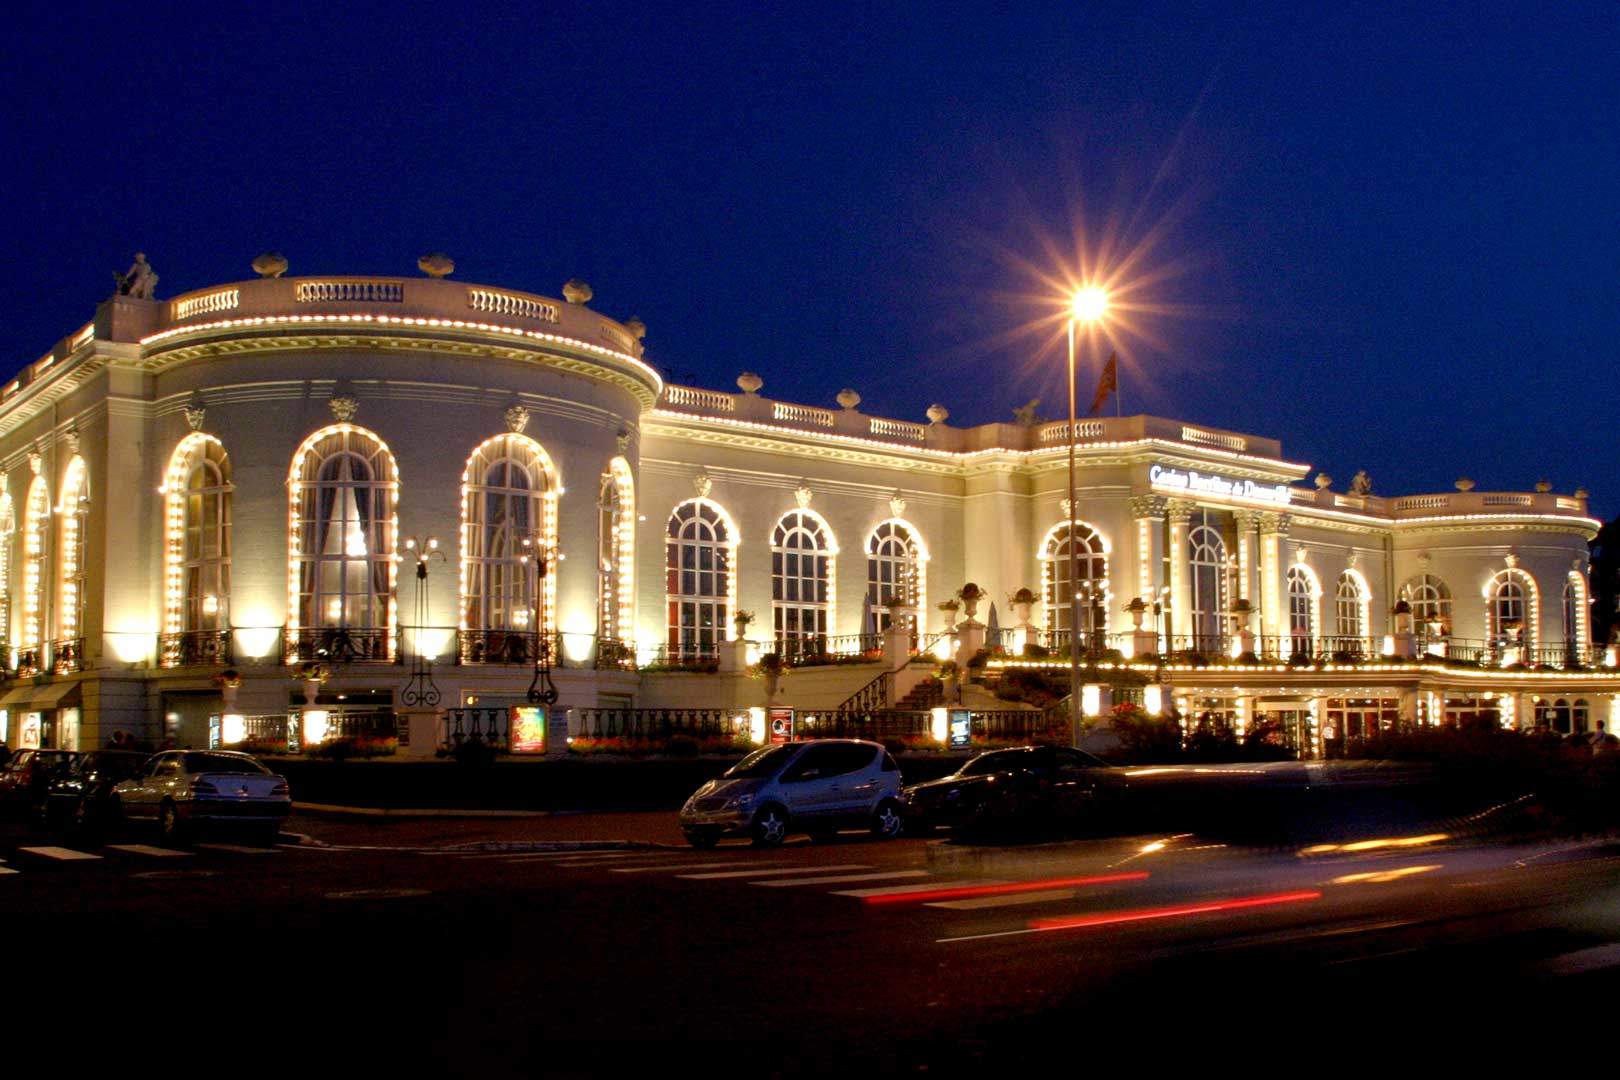 HOTEL LA CHENEVIERE In the heart of Normandy Deauville Casino